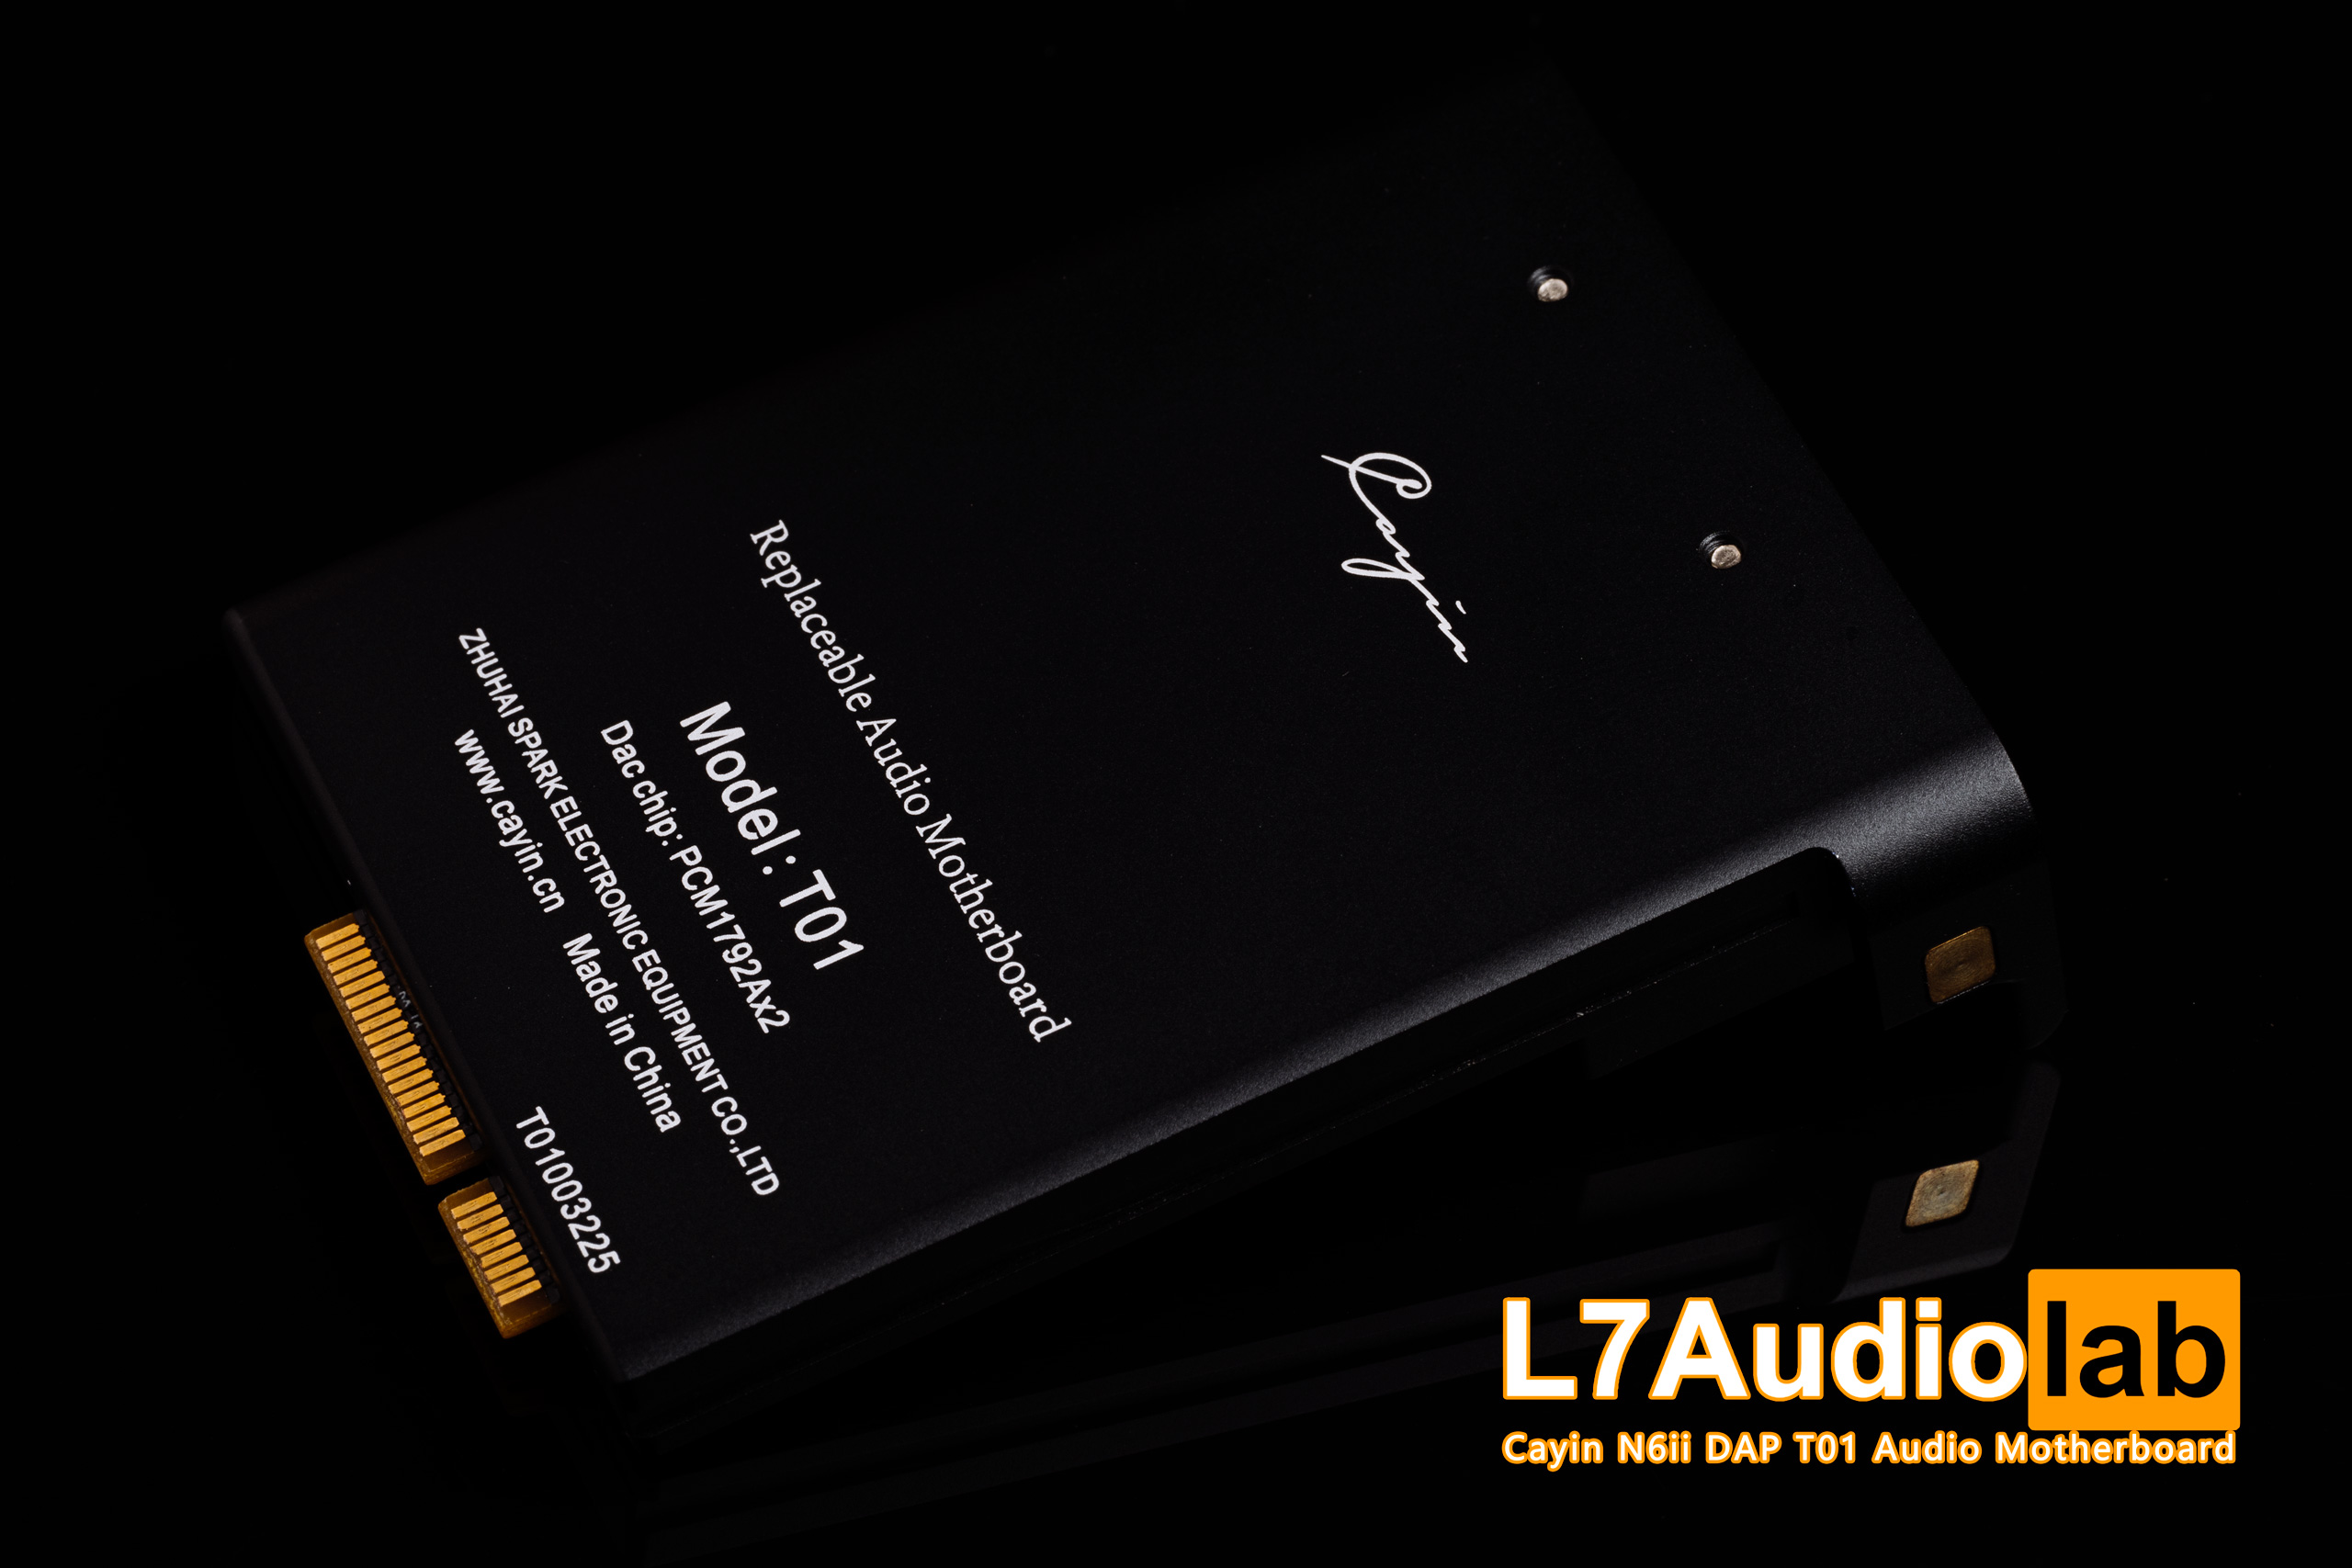 Measurements of Cayin N6ii T01 Audio Motherboard - L7Audiolab